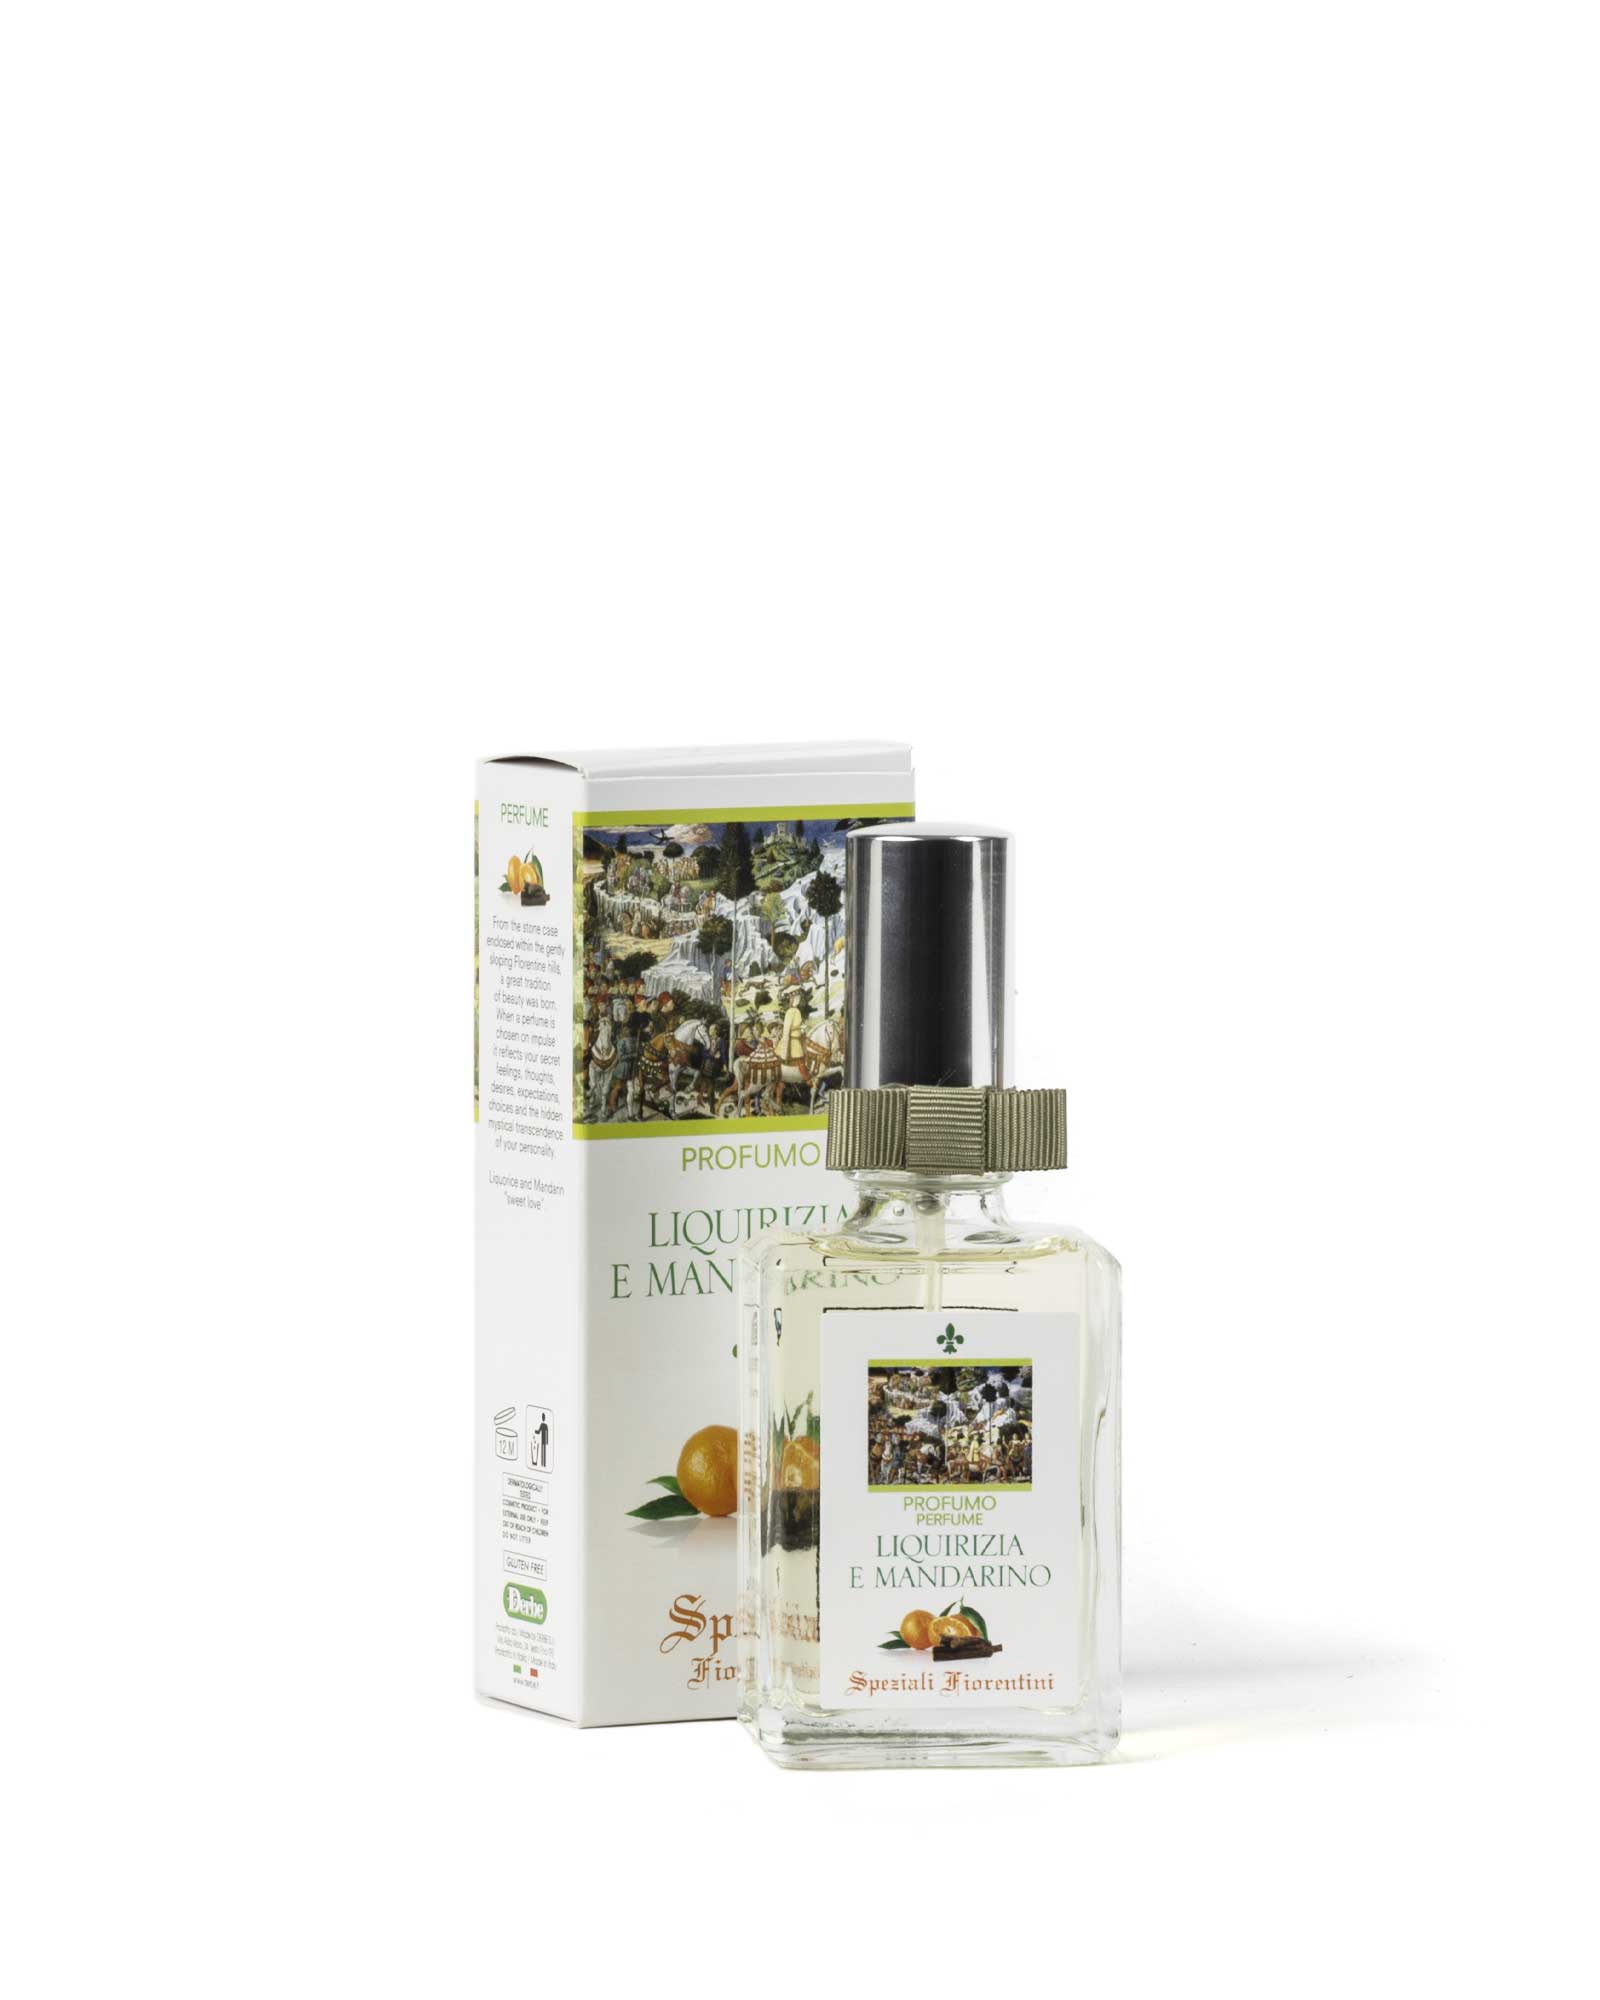 Parfüm Lakritze und Mandarine – Speziali Fiorentini – Derbe